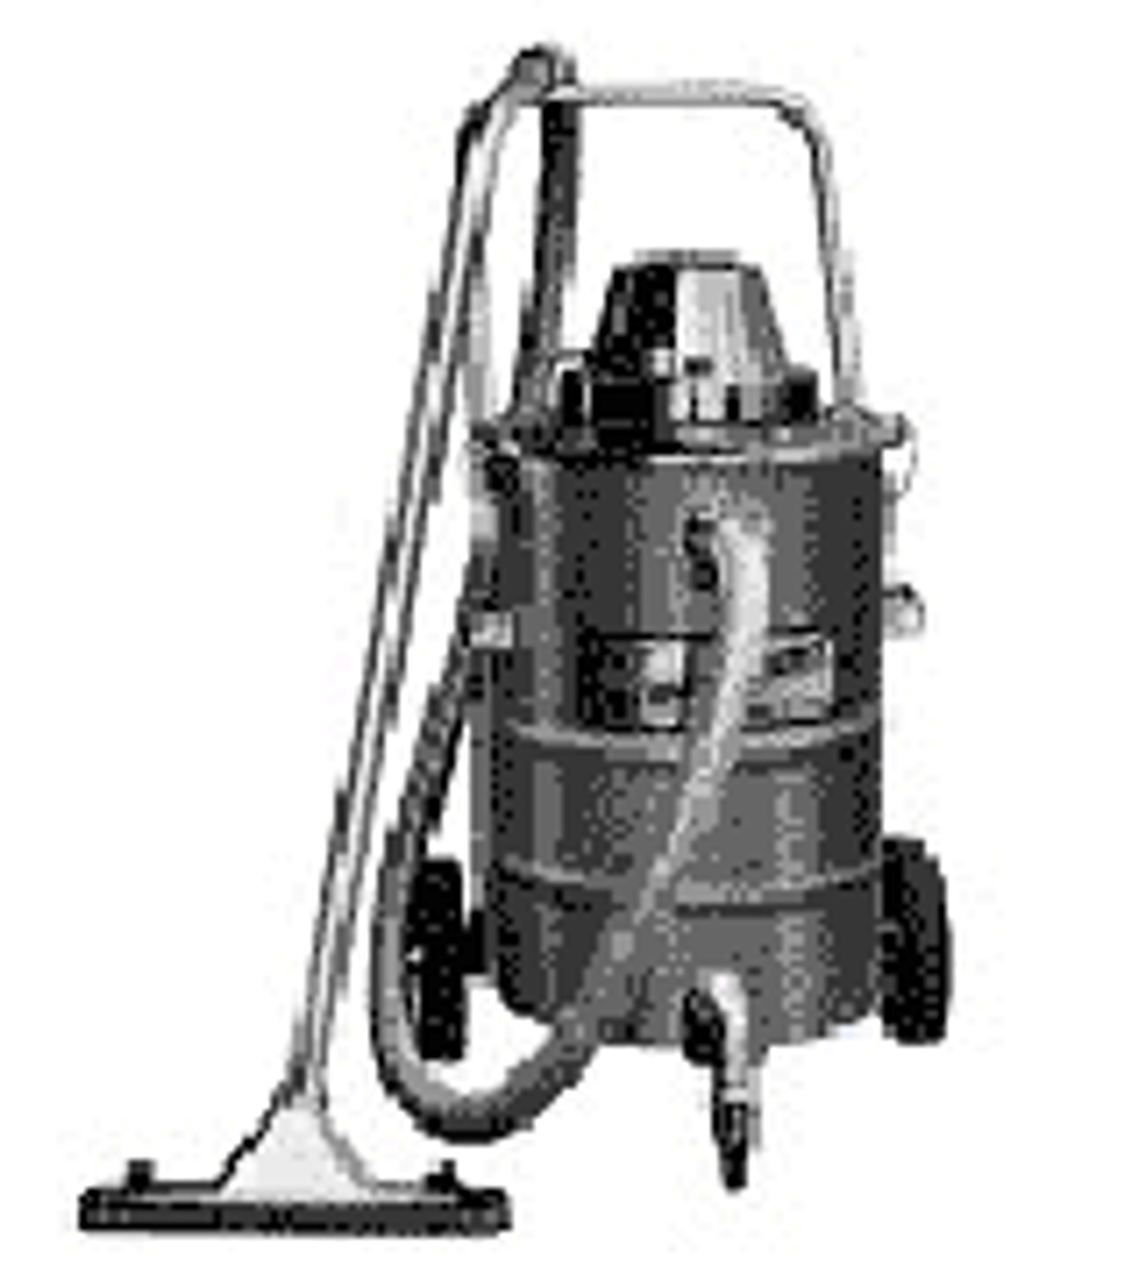 IMPA 590712 Lavor GB50XE, Wet & dry vacuum cleaner, cap 50 ltr, 220V, 50/60 Hz, 1600W, STST Housing Lavor